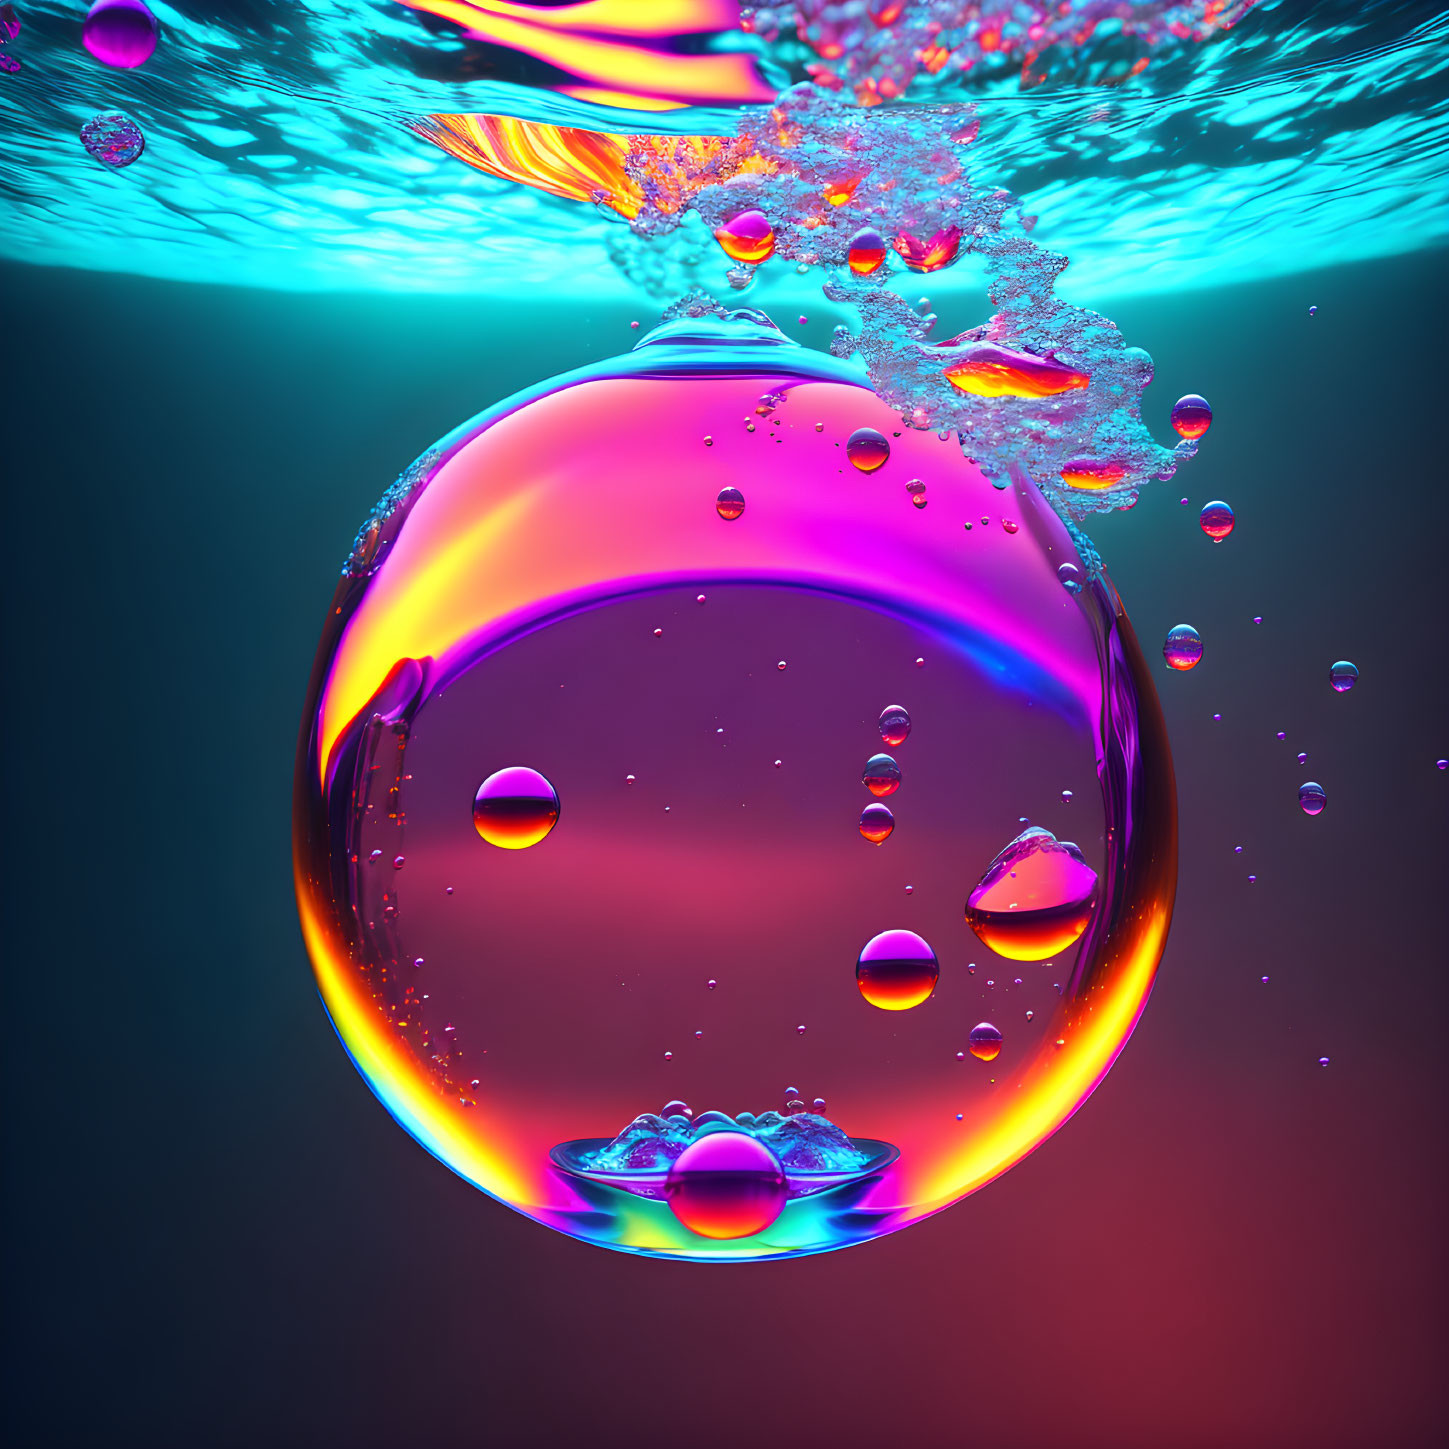 Colorful Digital Artwork of Iridescent Bubble Underwater